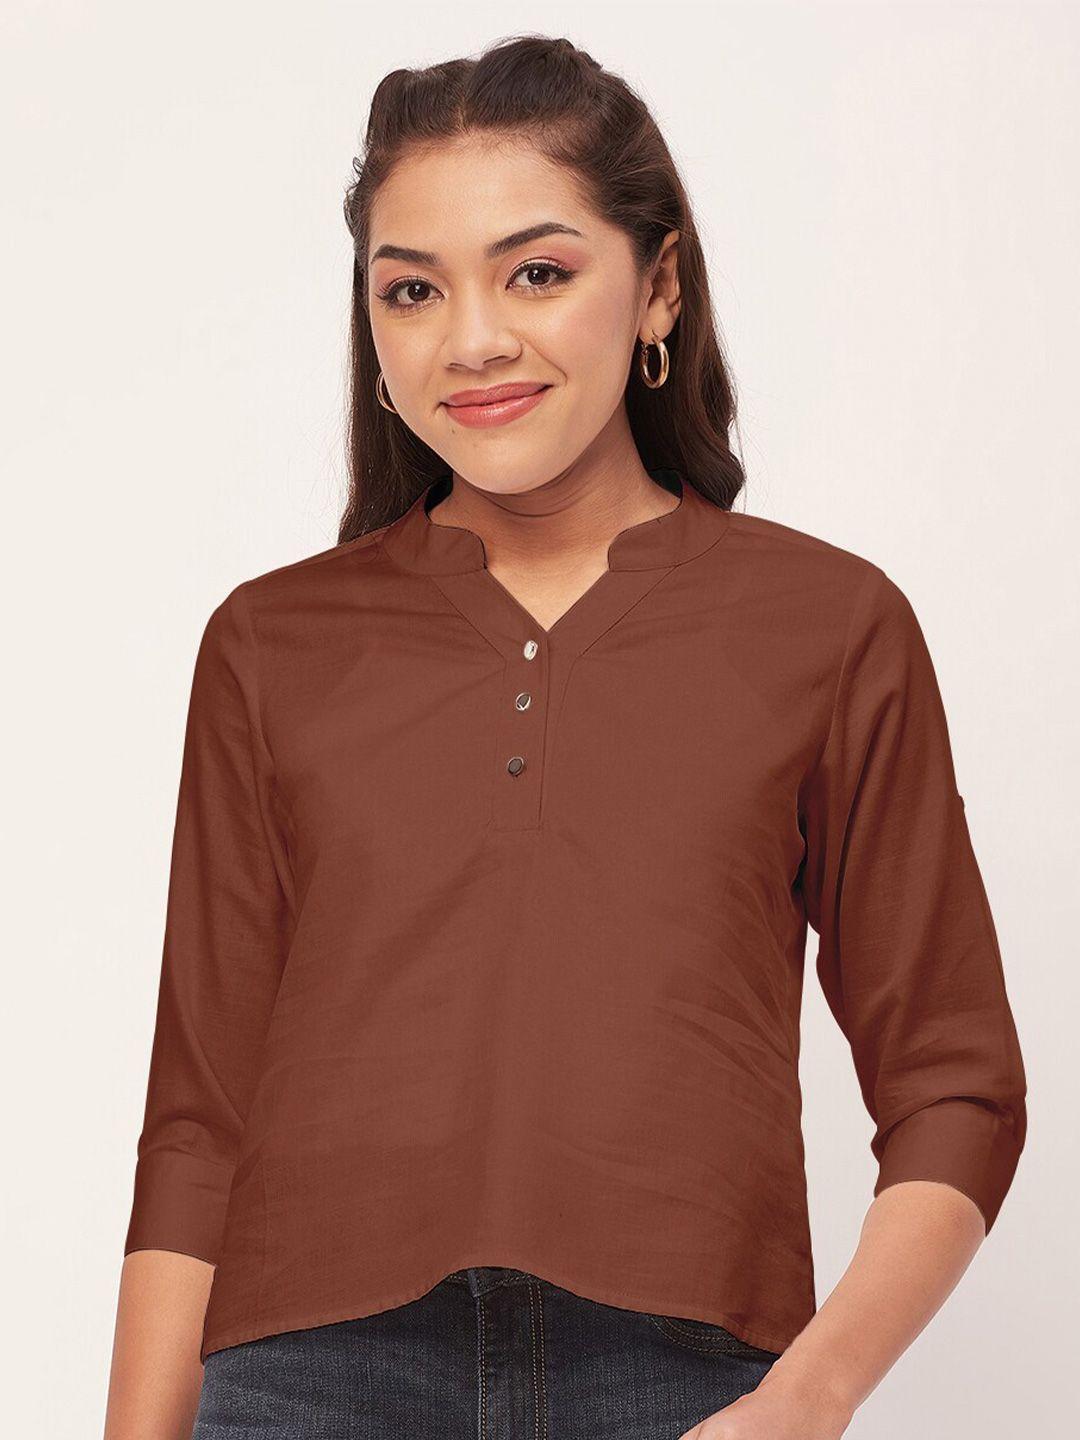 moomaya solid mandarin collar shirt style top